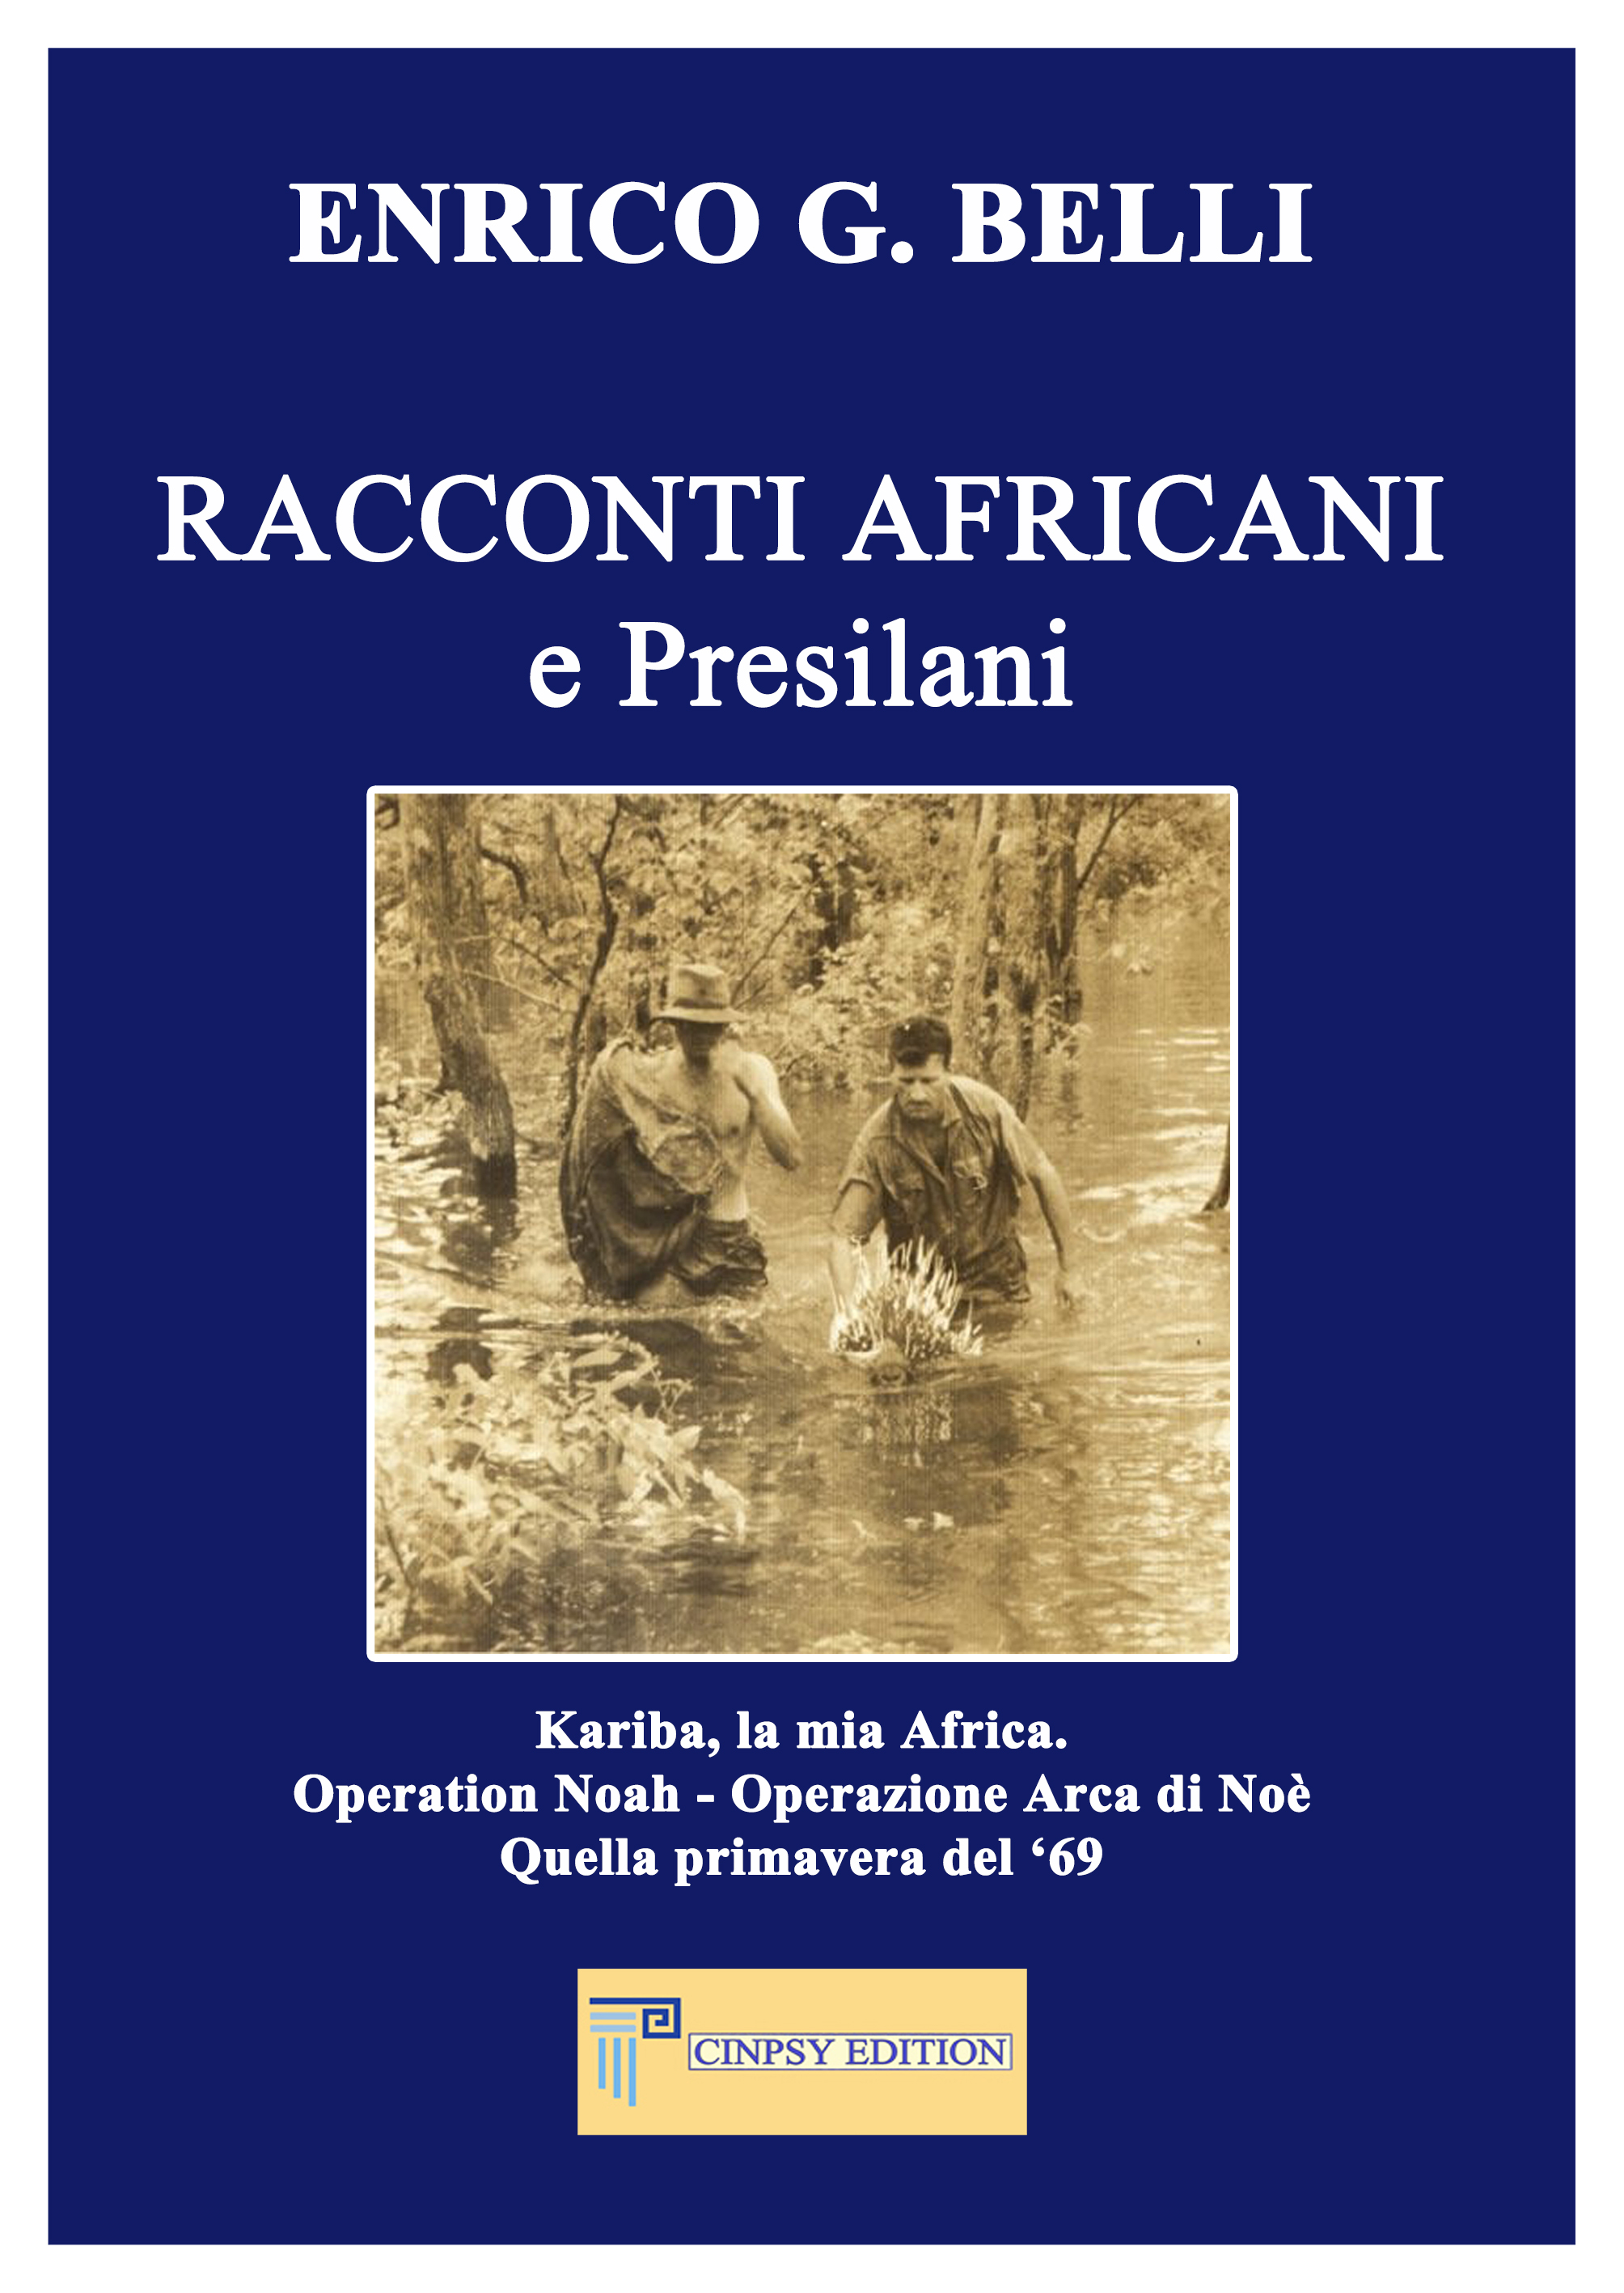 RACCONTI AFRICANI e PRESILANI - Enrico G. BELLI